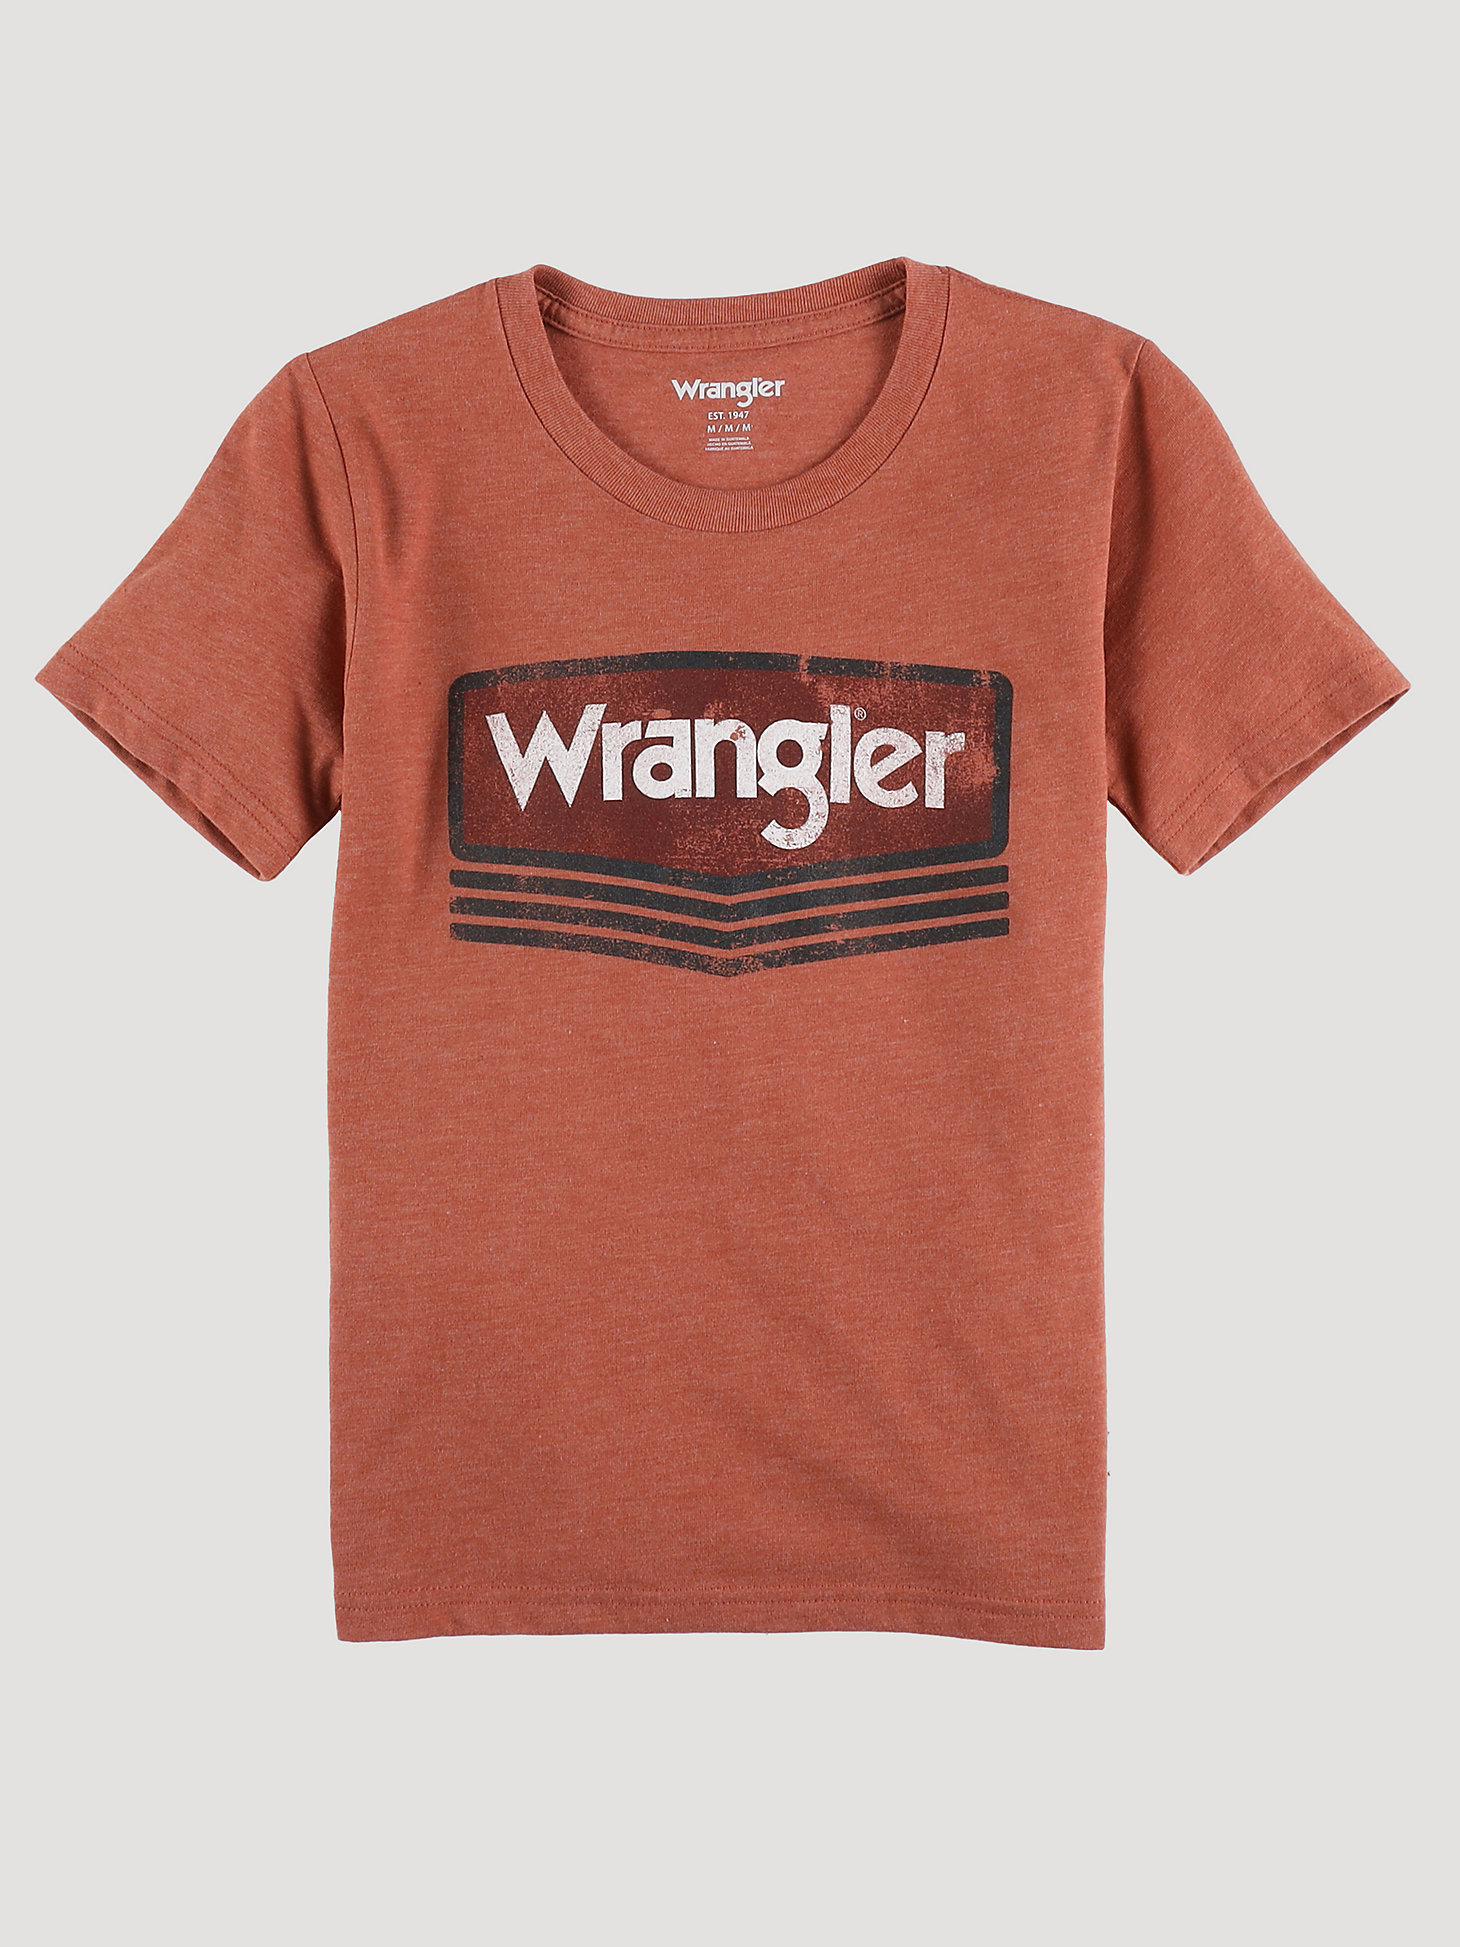 Boy's Wrangler Classic Emblem Graphic T-Shirt